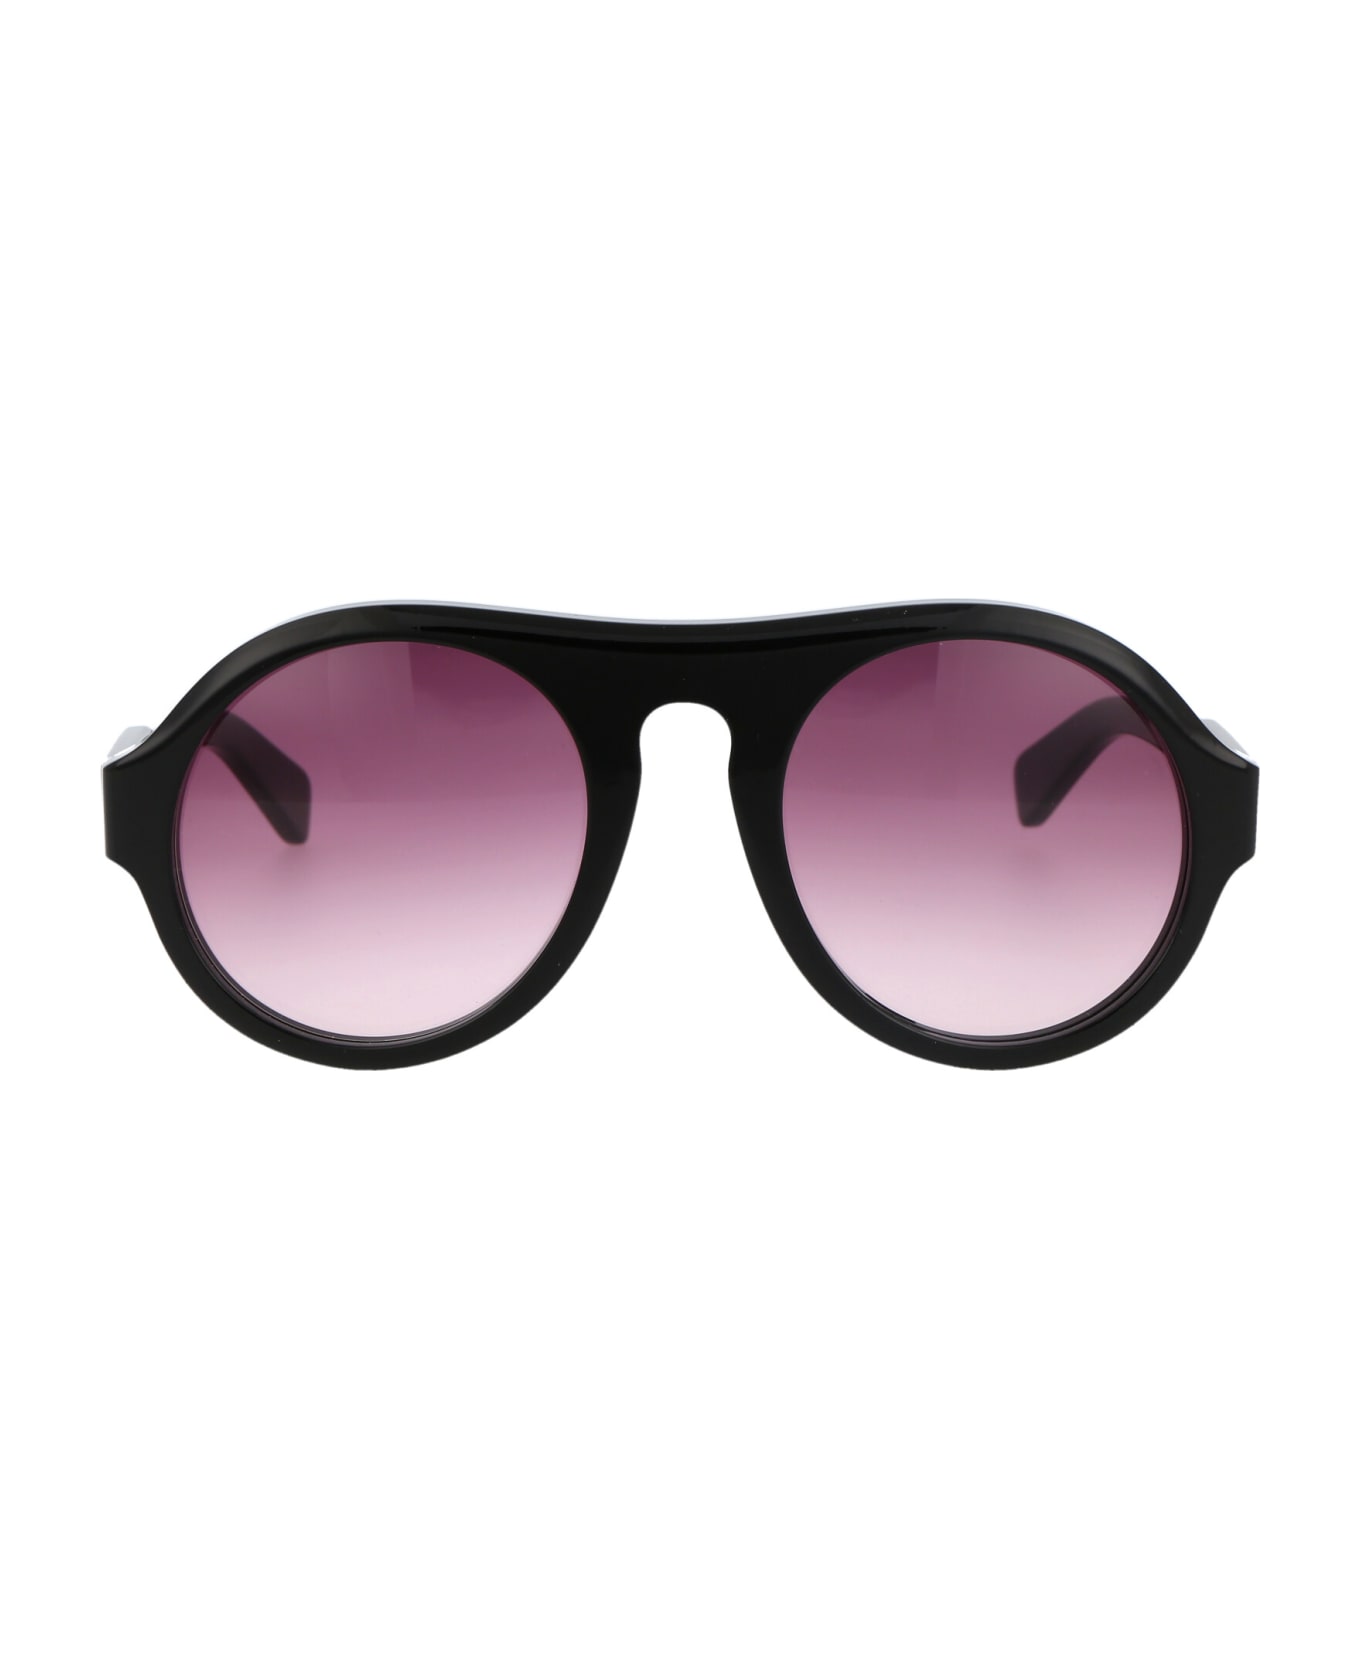 Chloé Eyewear Ch0151s Sunglasses - 001 BLACK BLACK RED